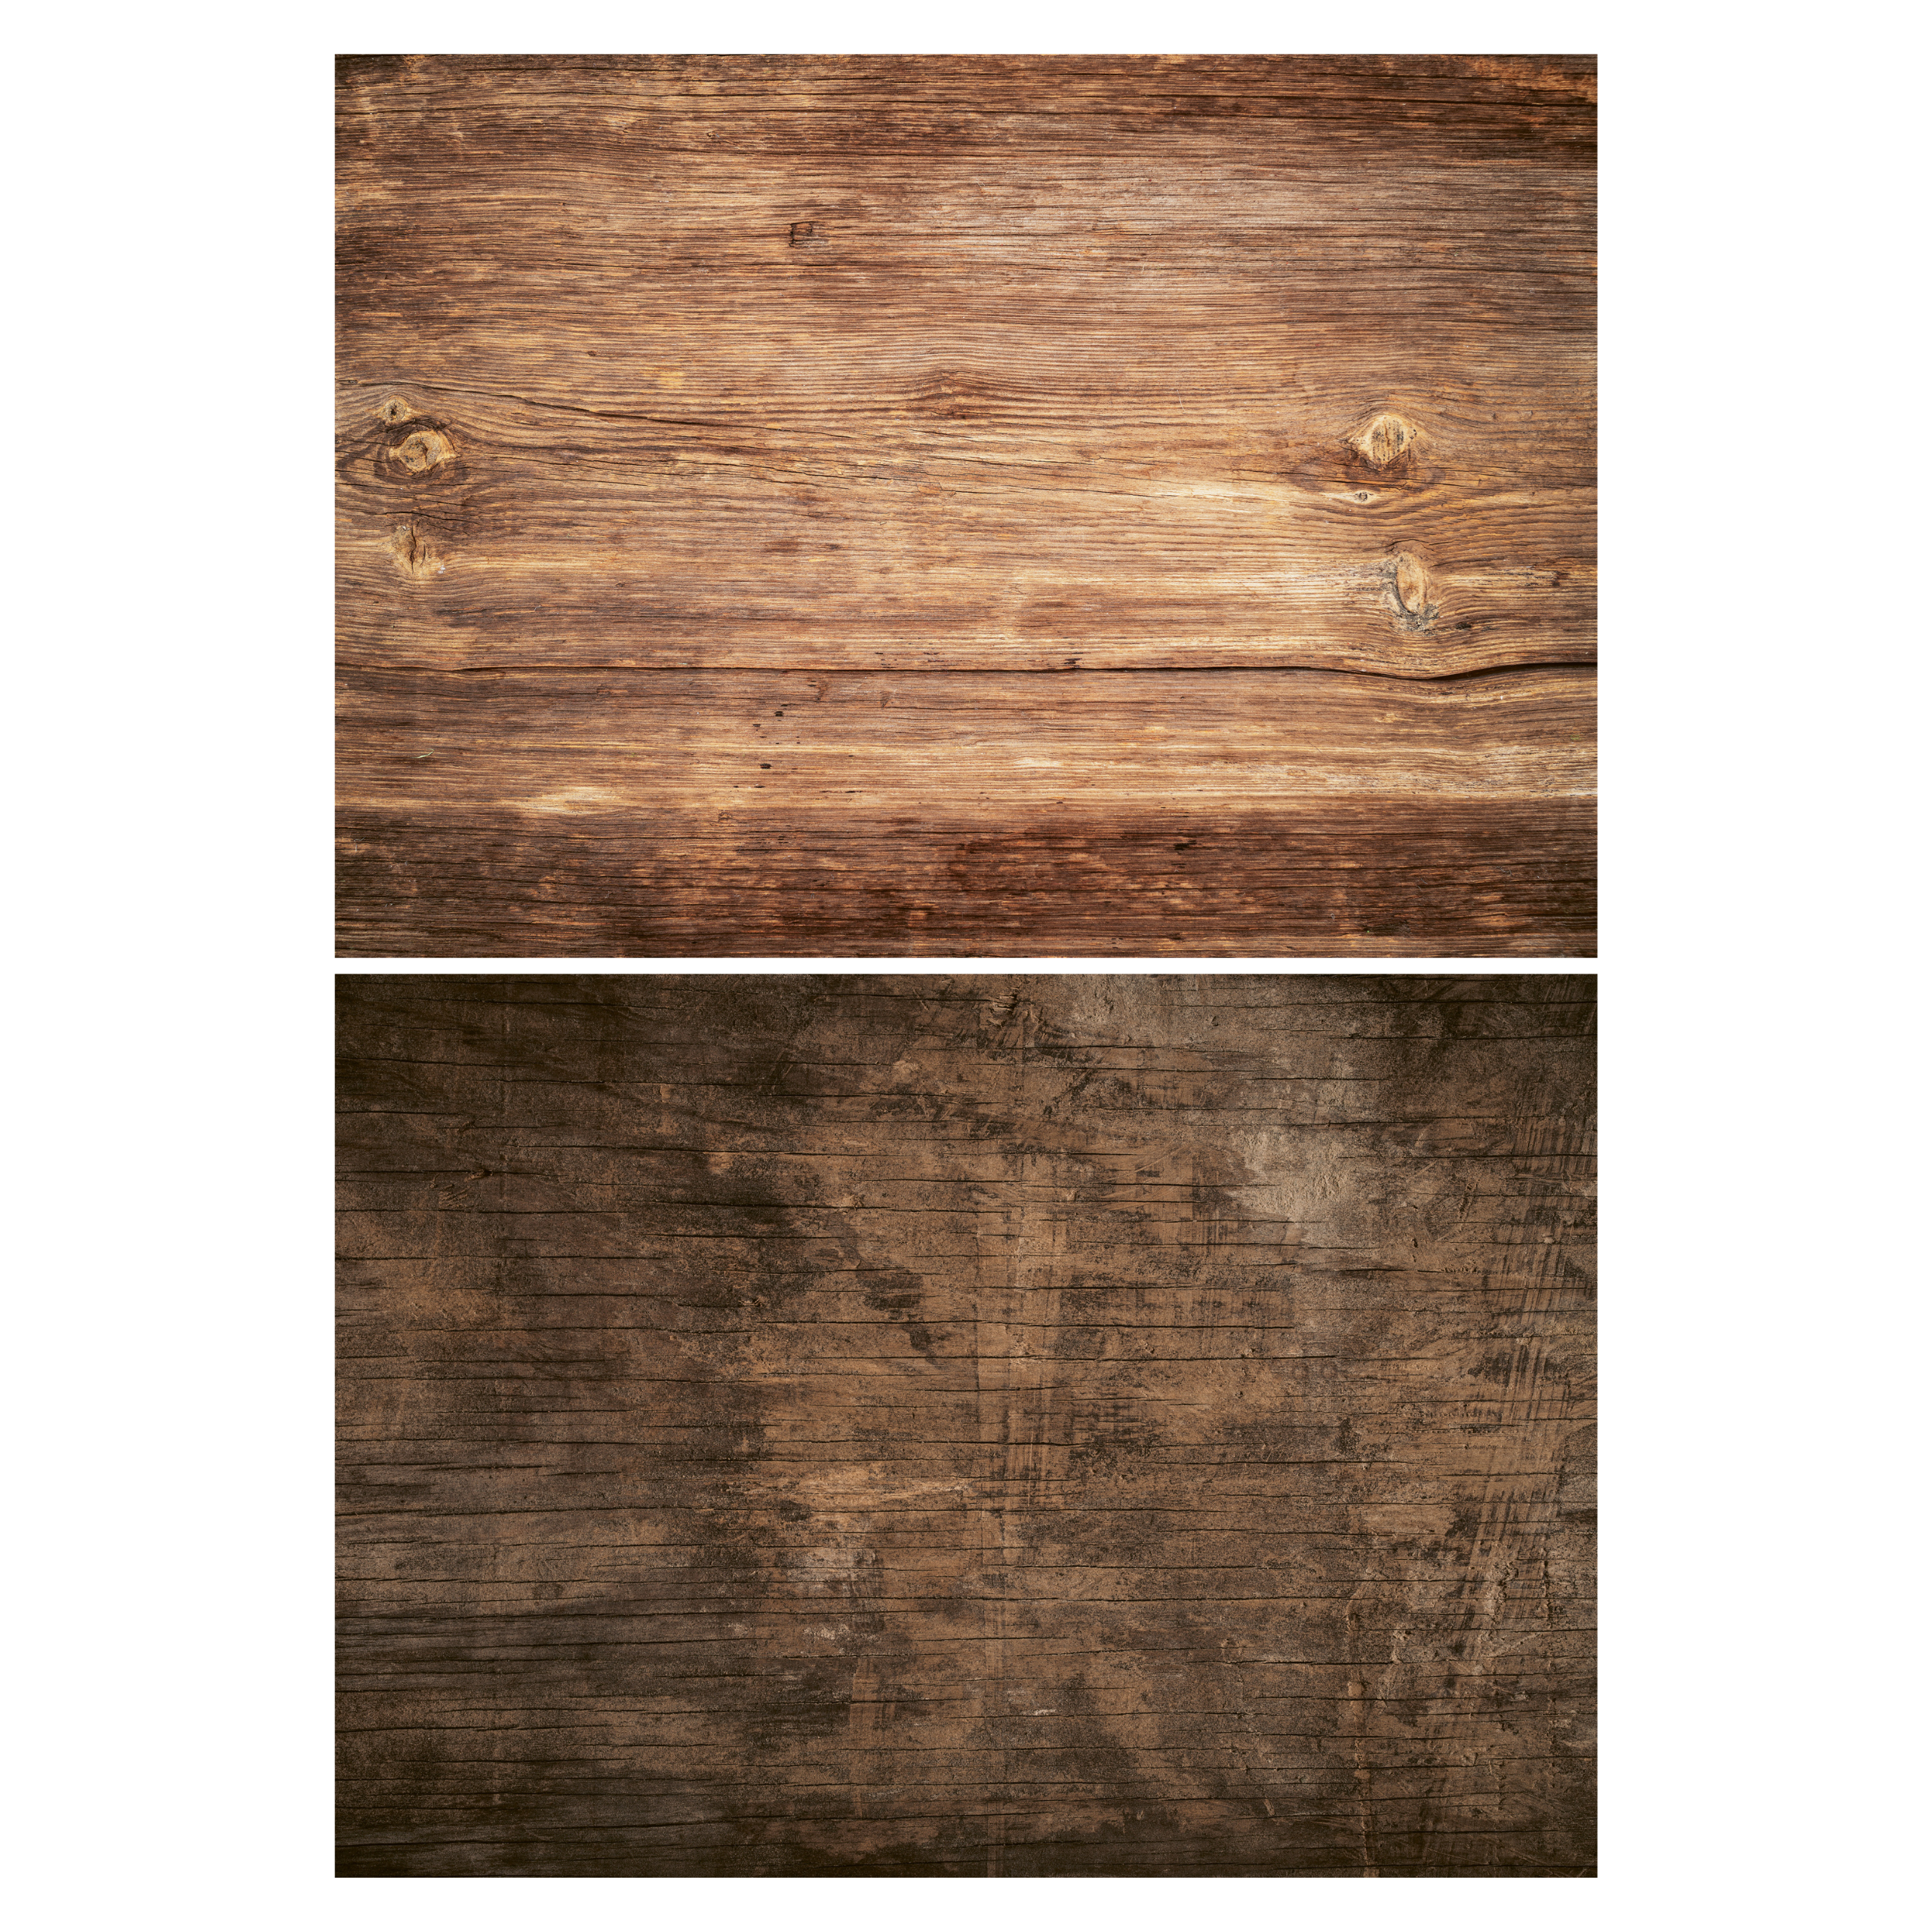 Fotografie, Makrofotografie, Produktfotografie, Flatlay Food Studiofotografie für Holz LENS-AID 67, passend Fotohintergrund, Holzfarben,